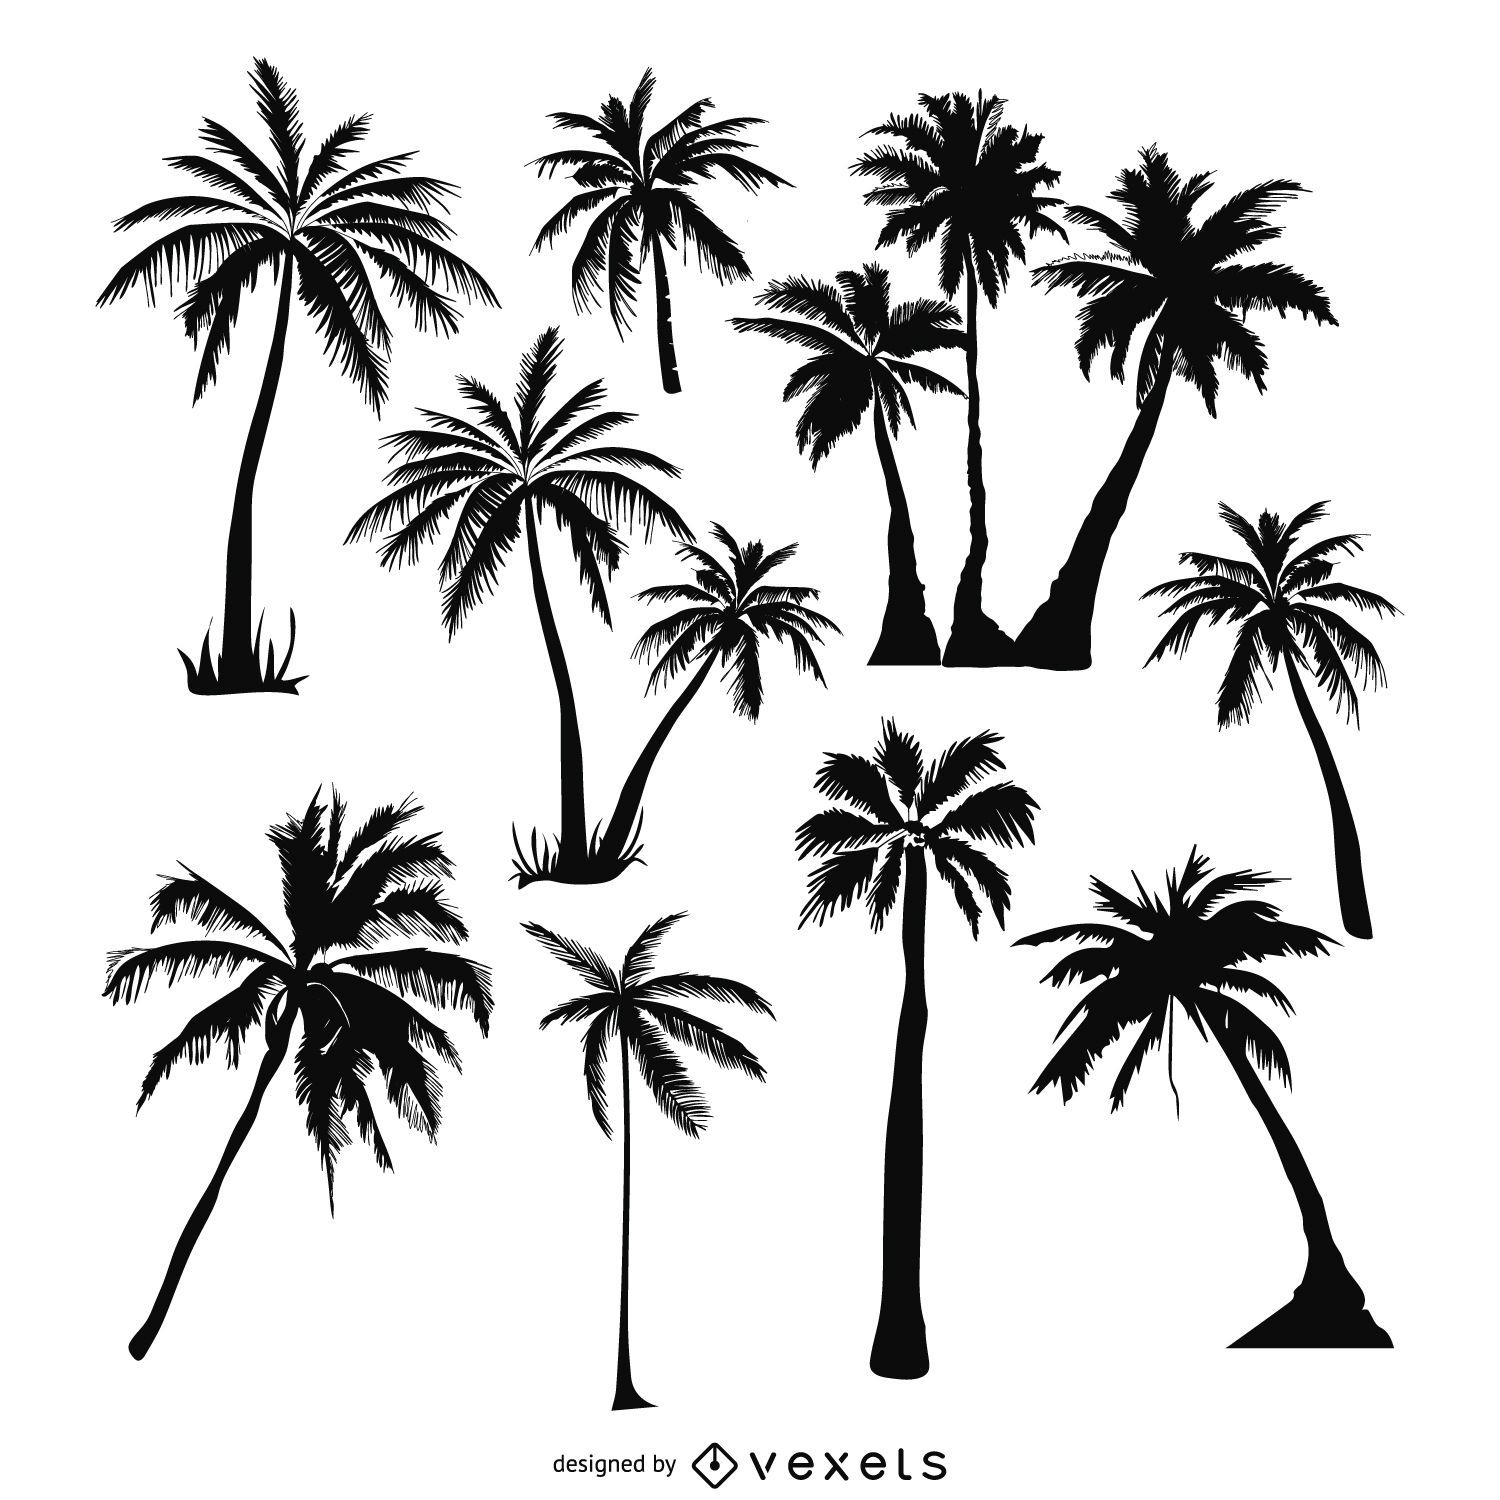 Palm trees silhouettes set